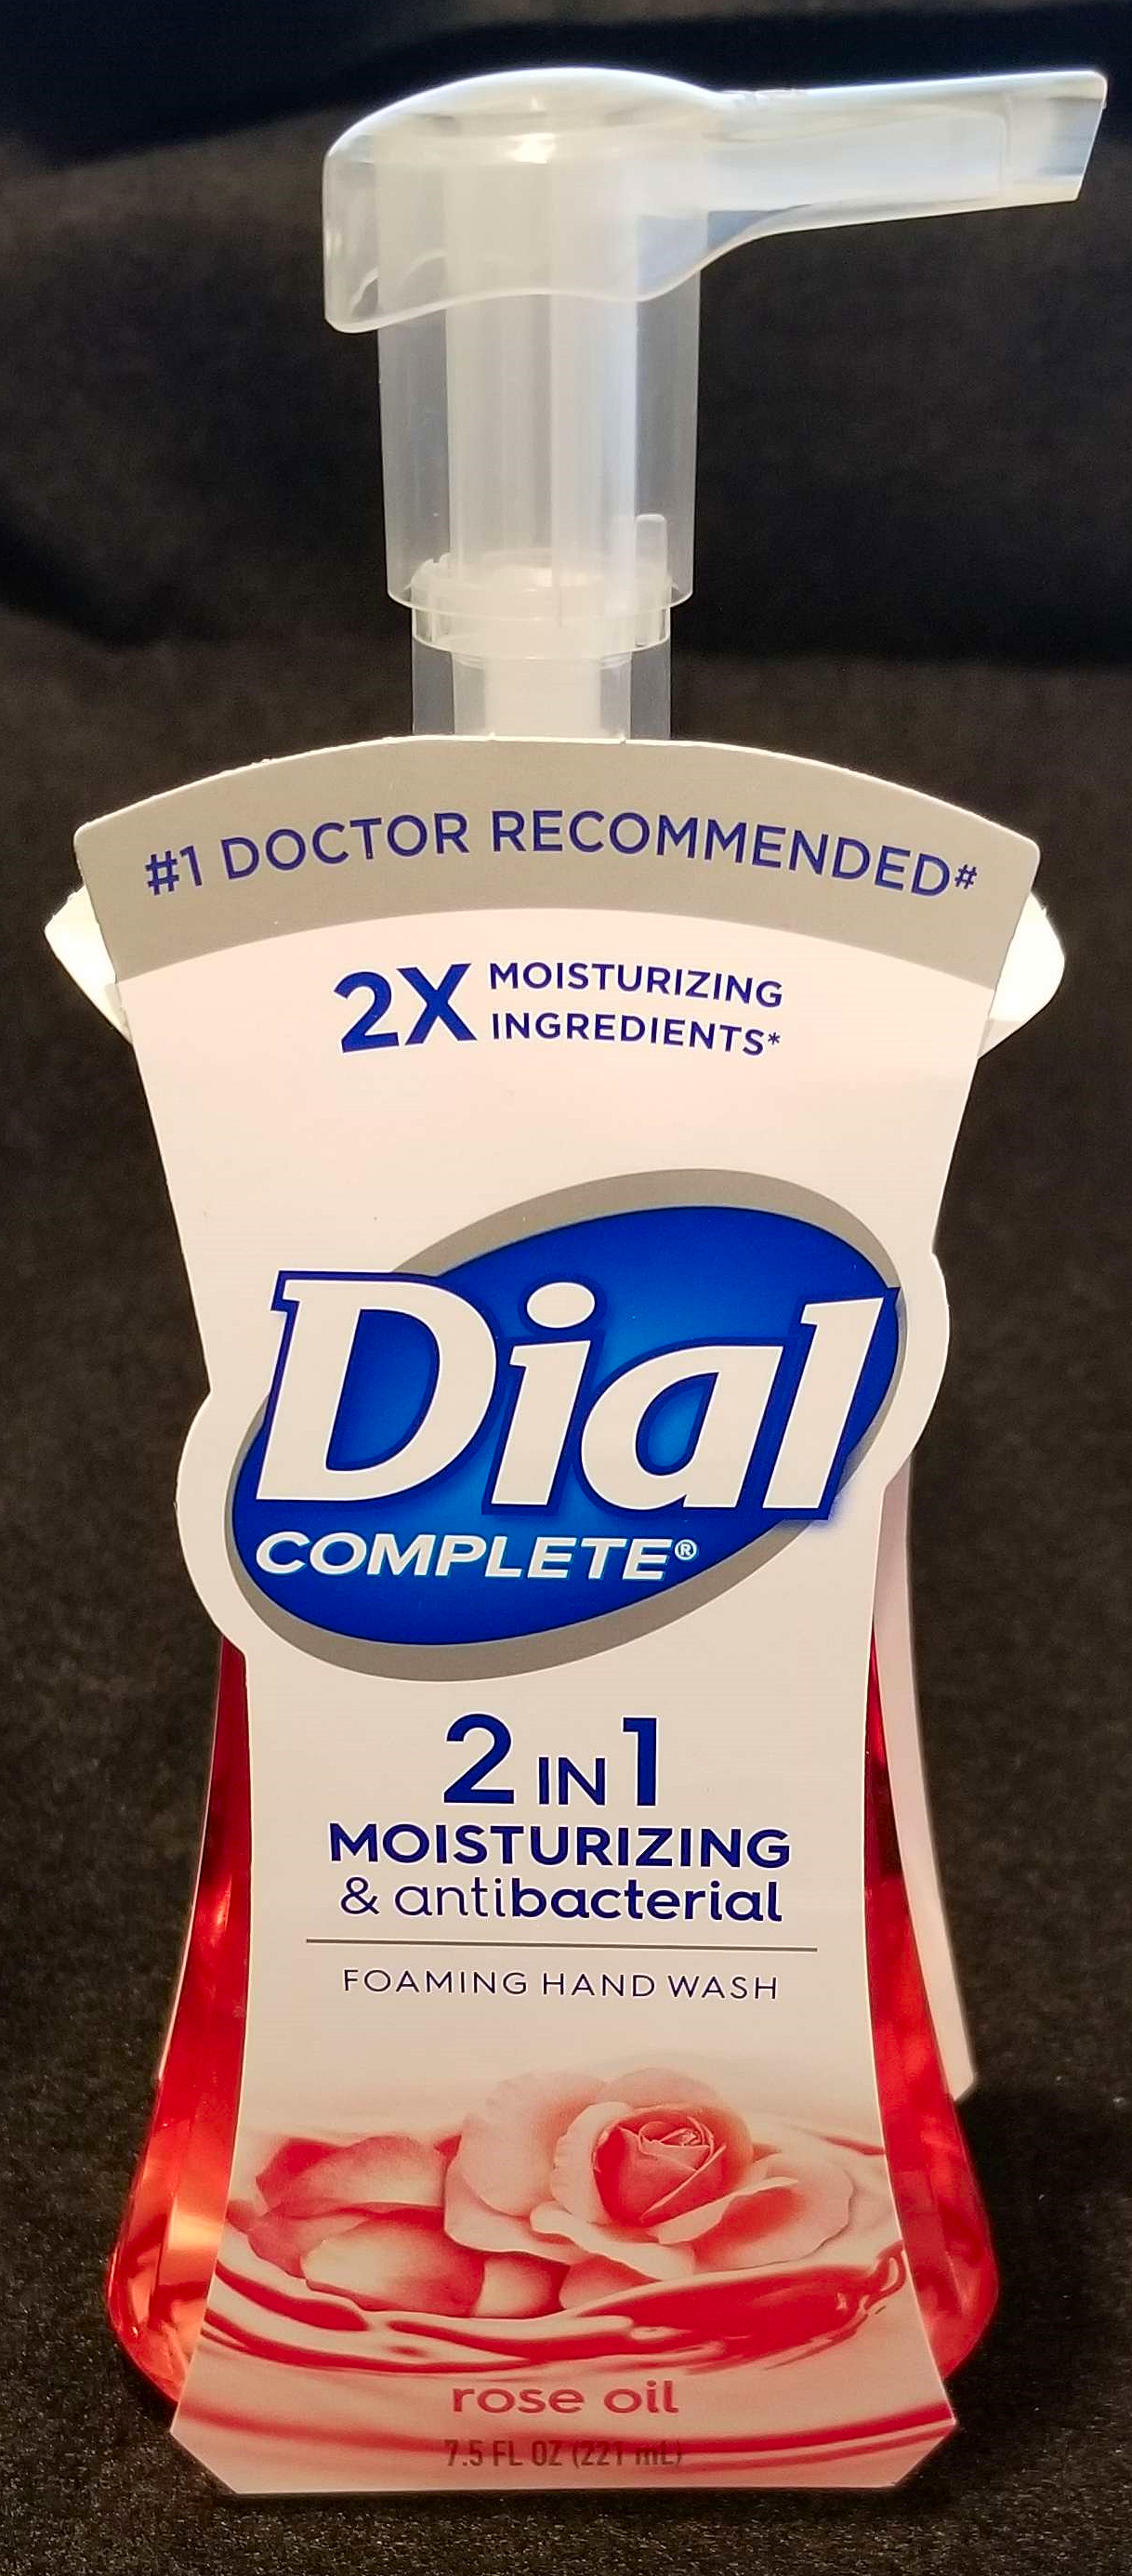 Dial 2 in 1 Moisturizing & Antibacterial Hand Wash - Rose Oil